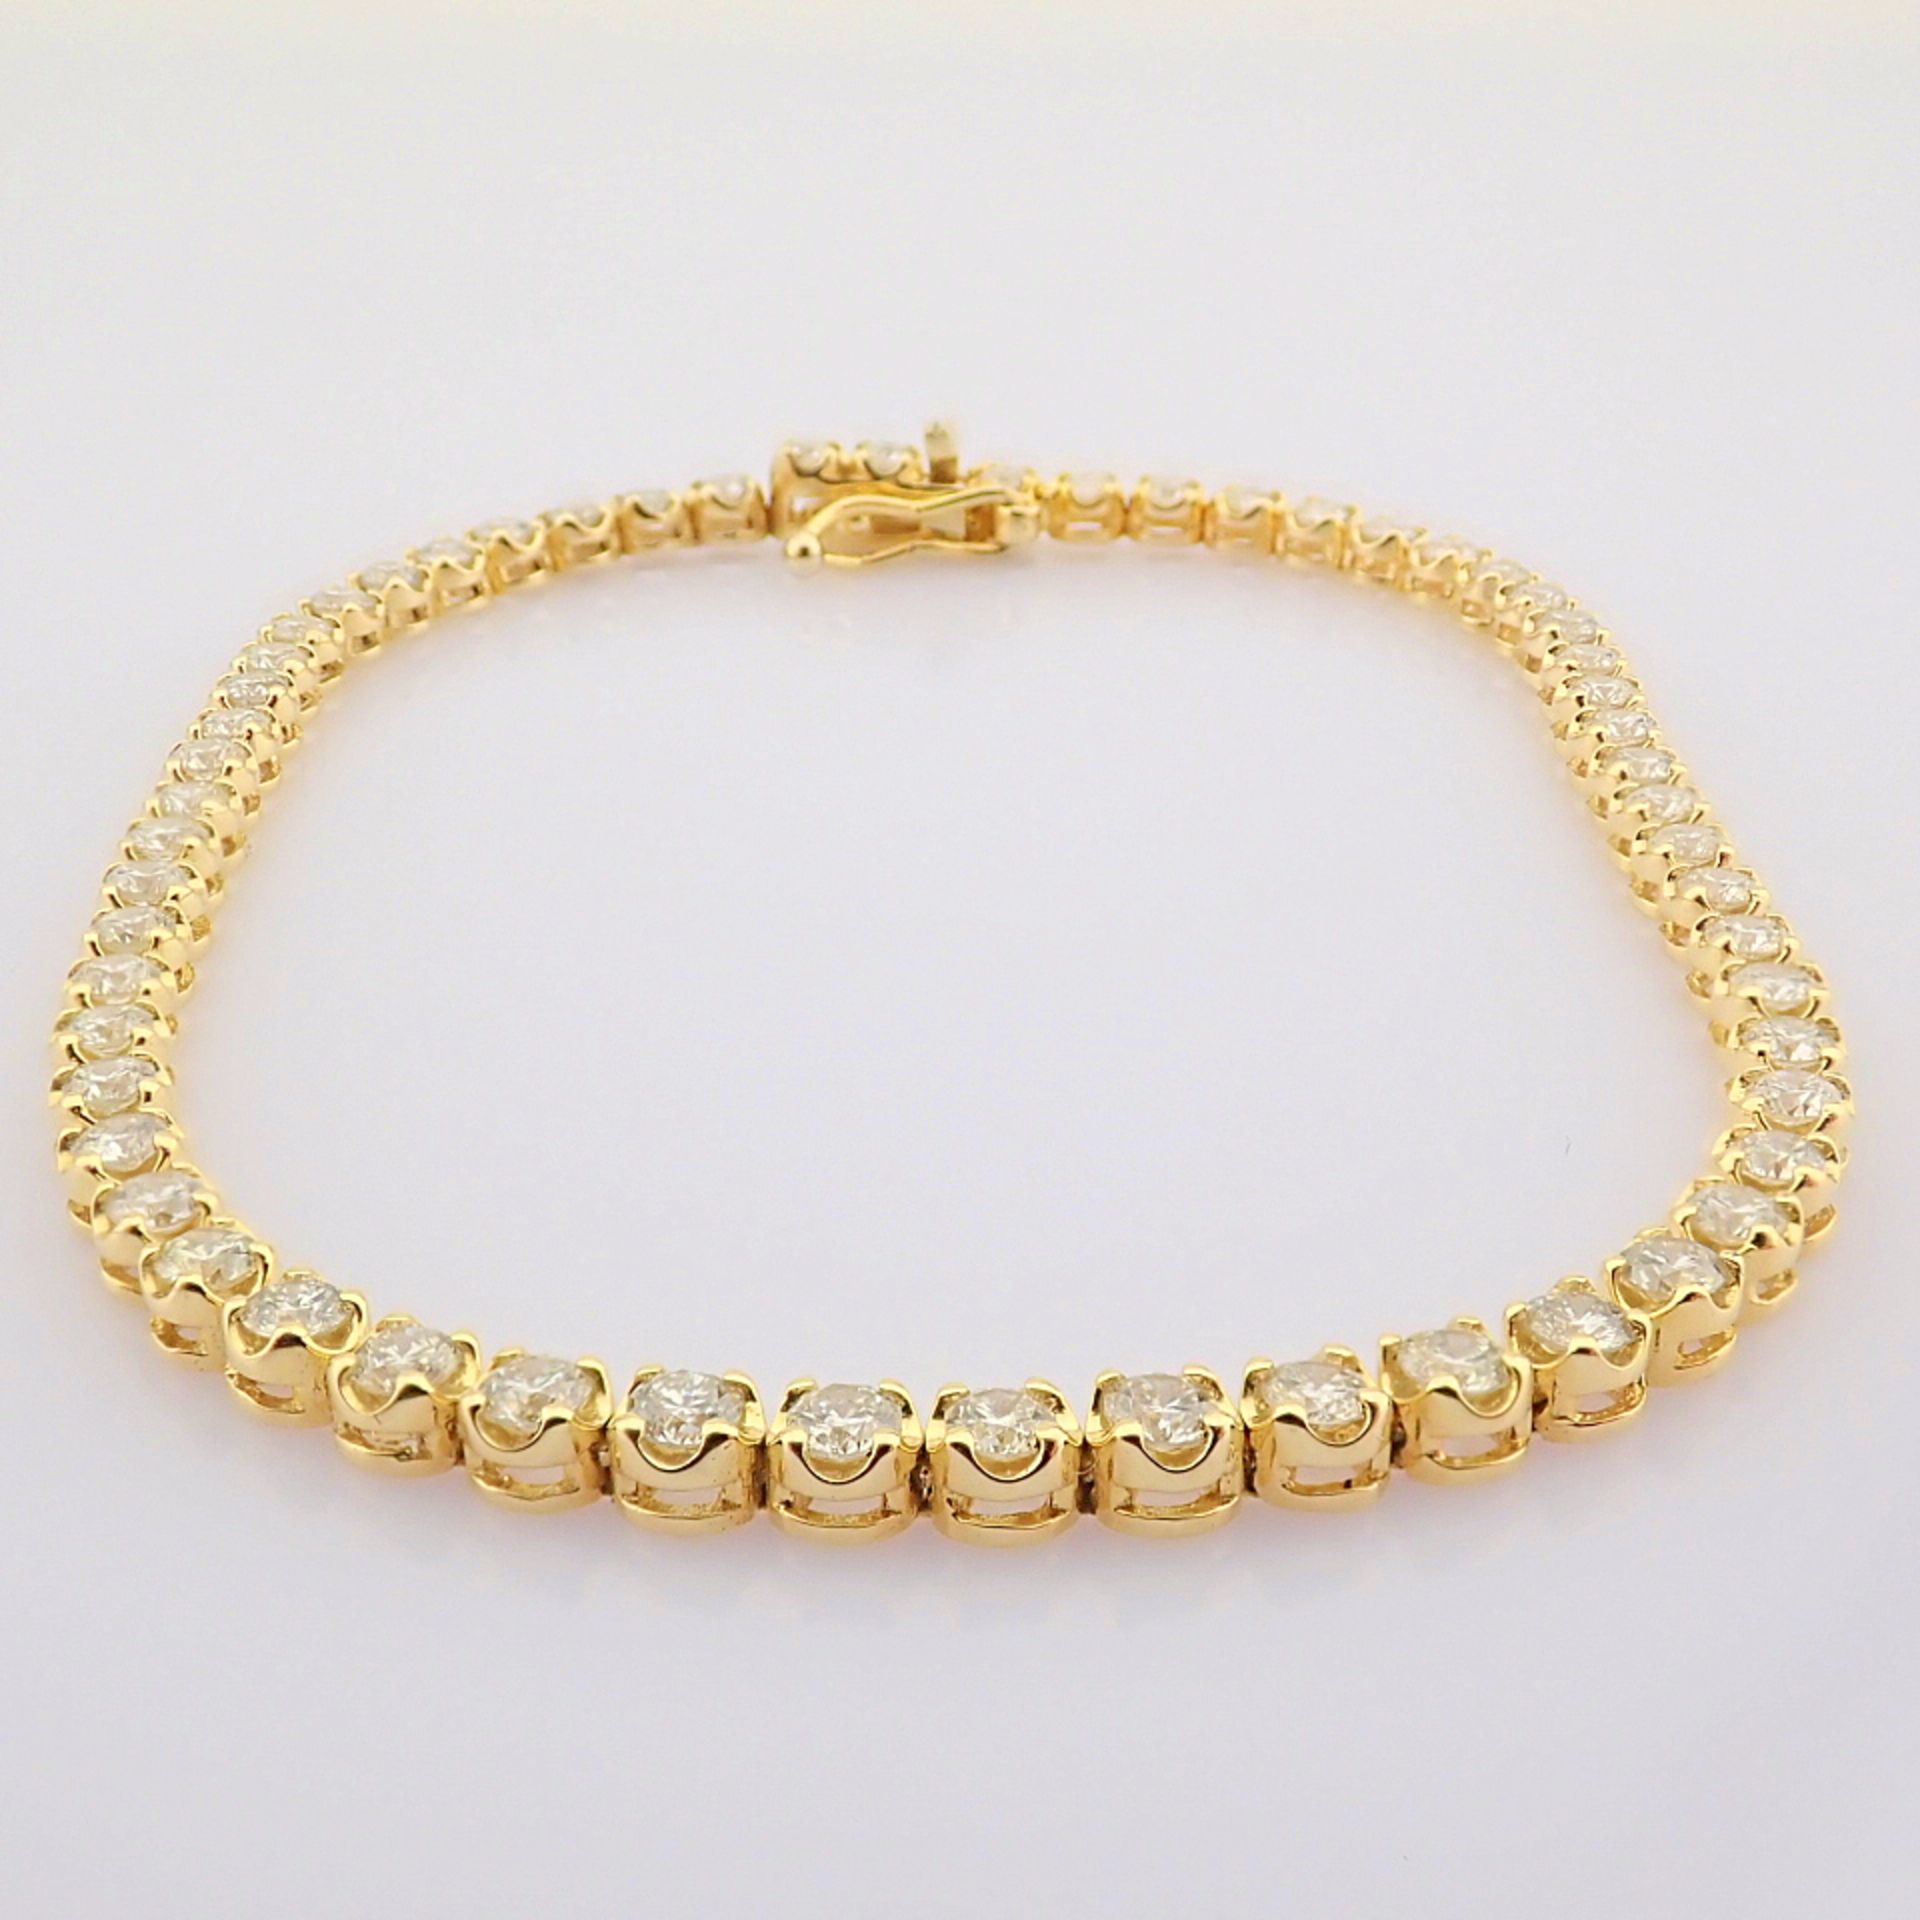 2,10 Ct. Diamond Tennis Bracelet (Crown) - 14K Yellow Gold - Image 8 of 14